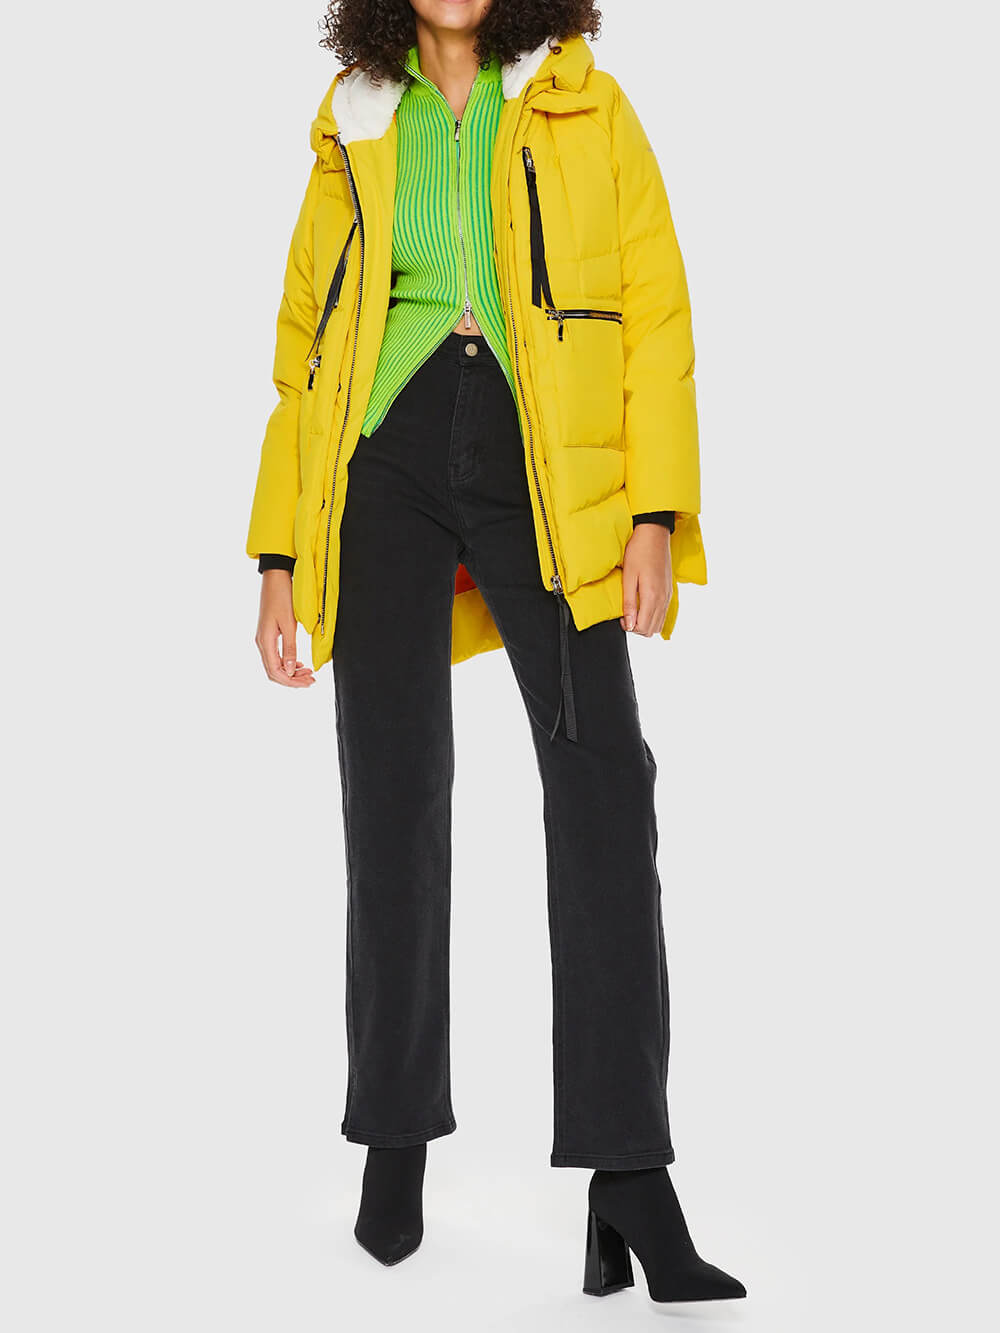 Ava Tran - 하트랜드 파커 재킷